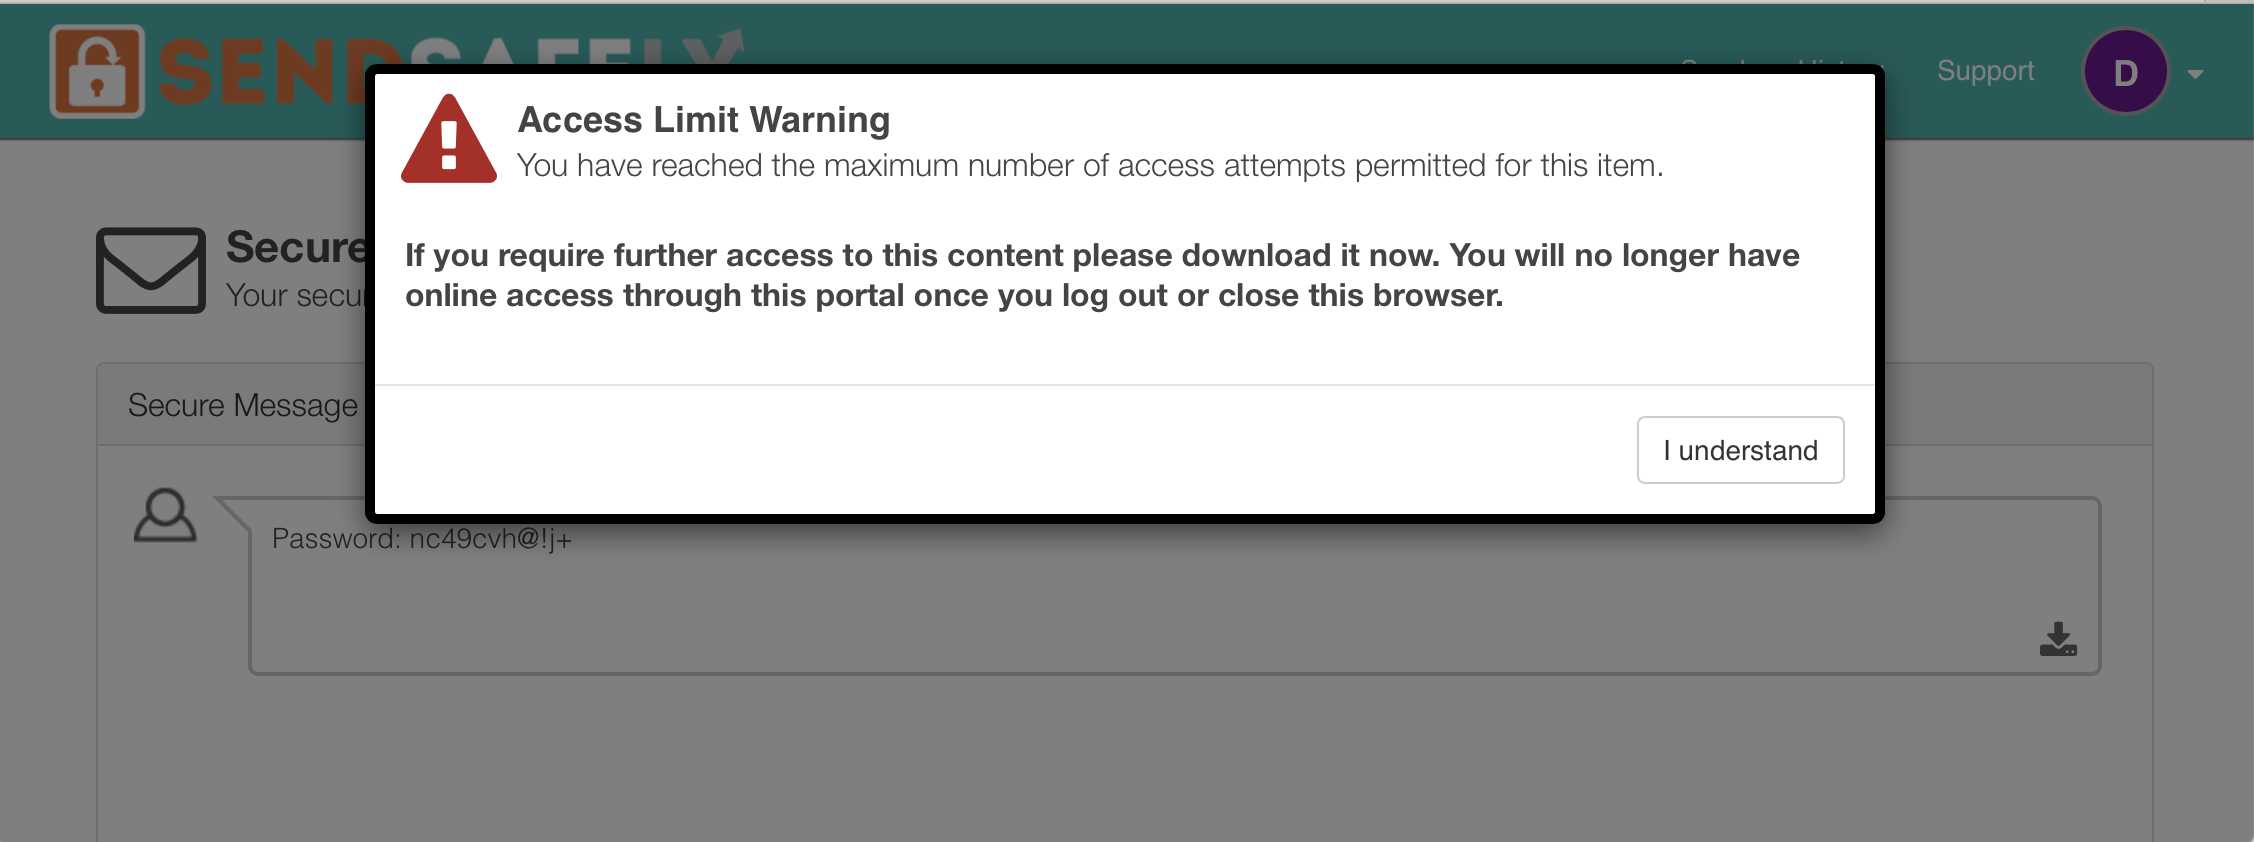 Access Warning Limit